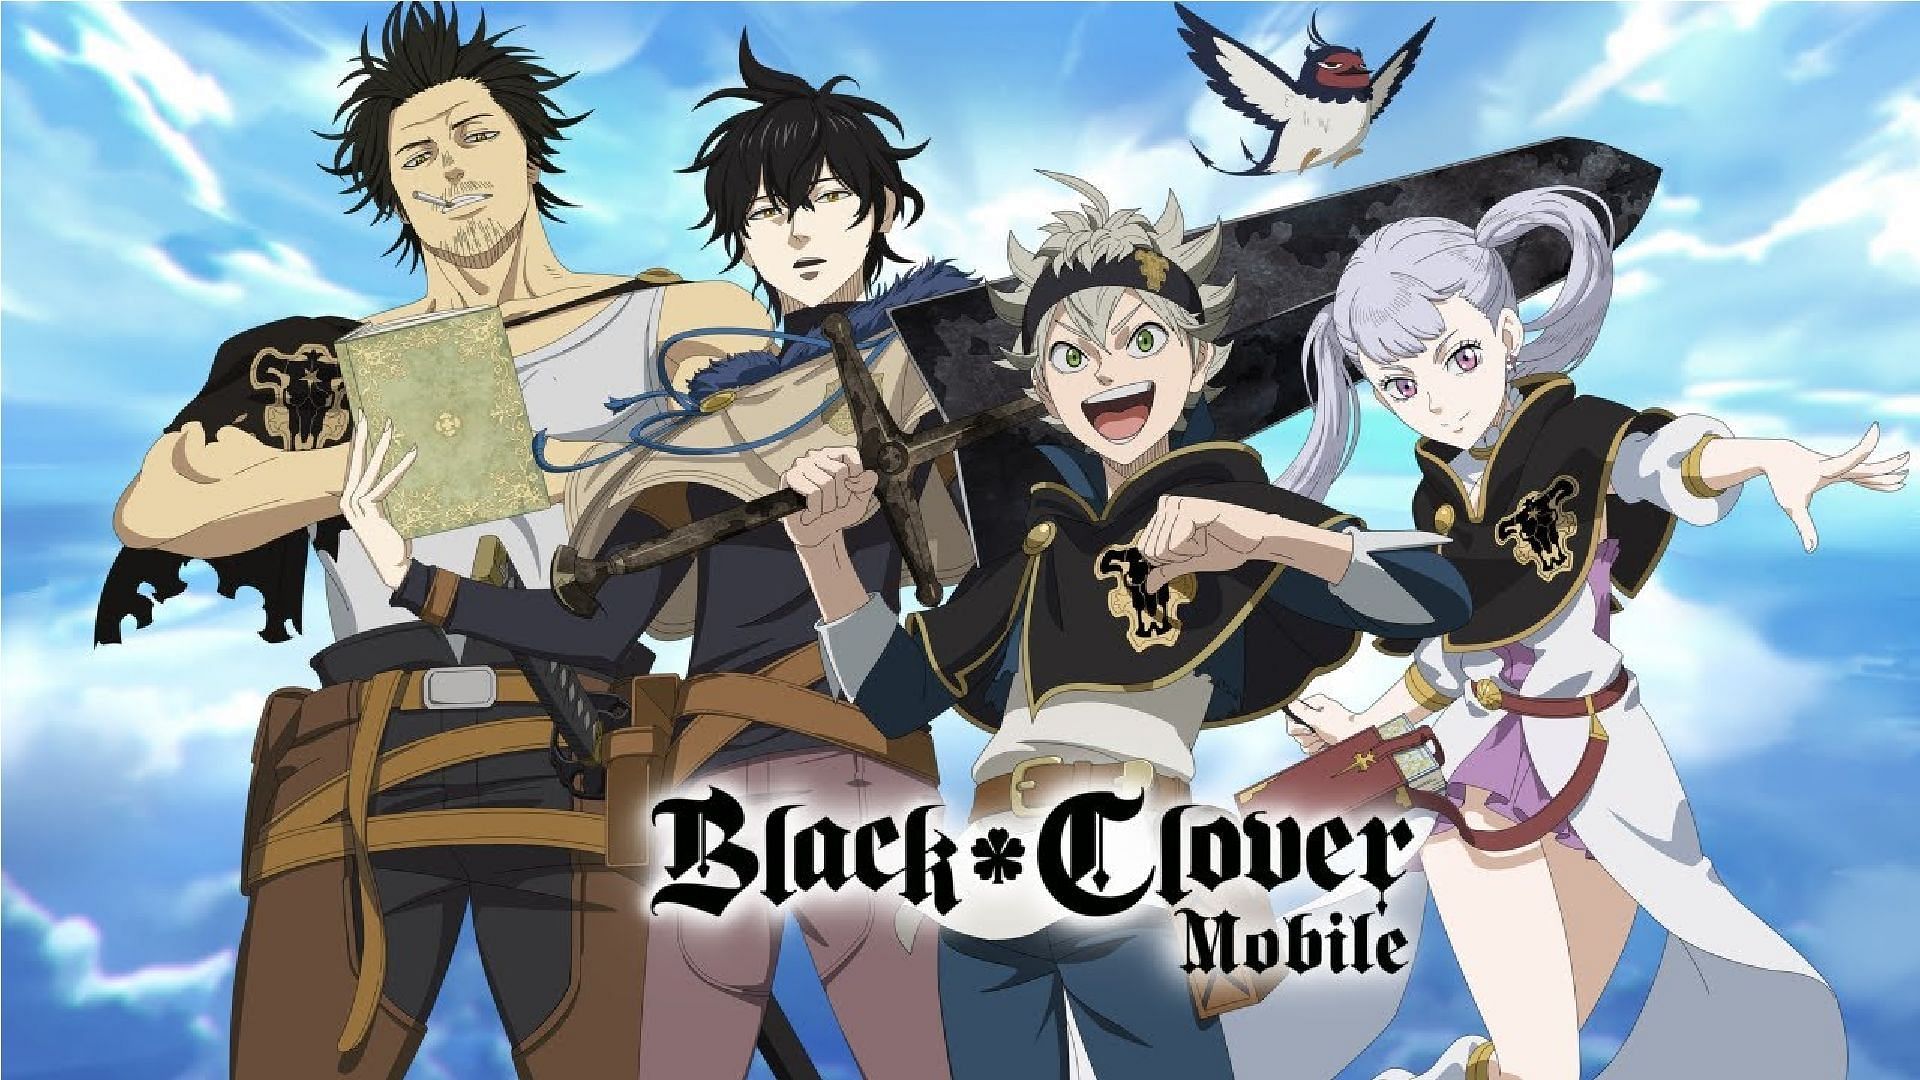 Black Clover Mobile Season 3